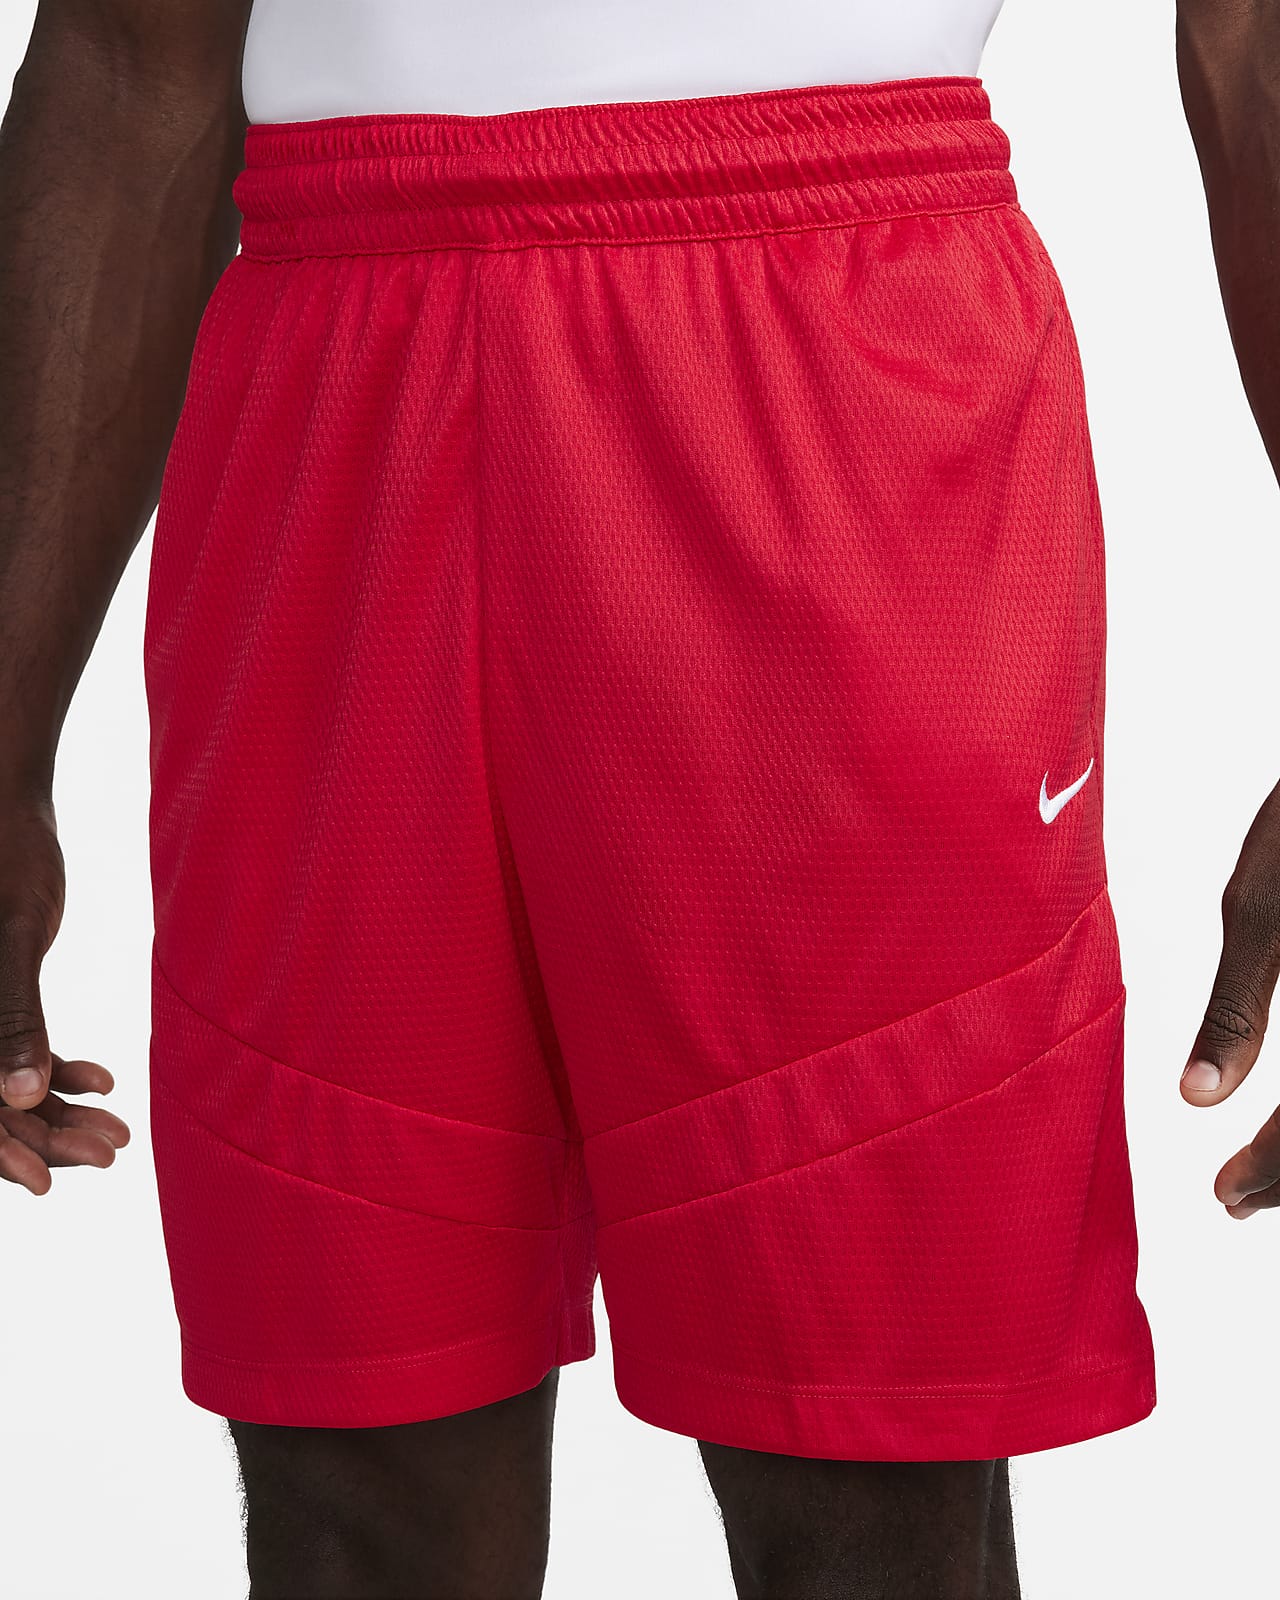 adidas Team Speed Performance Basketball Shorts - Men